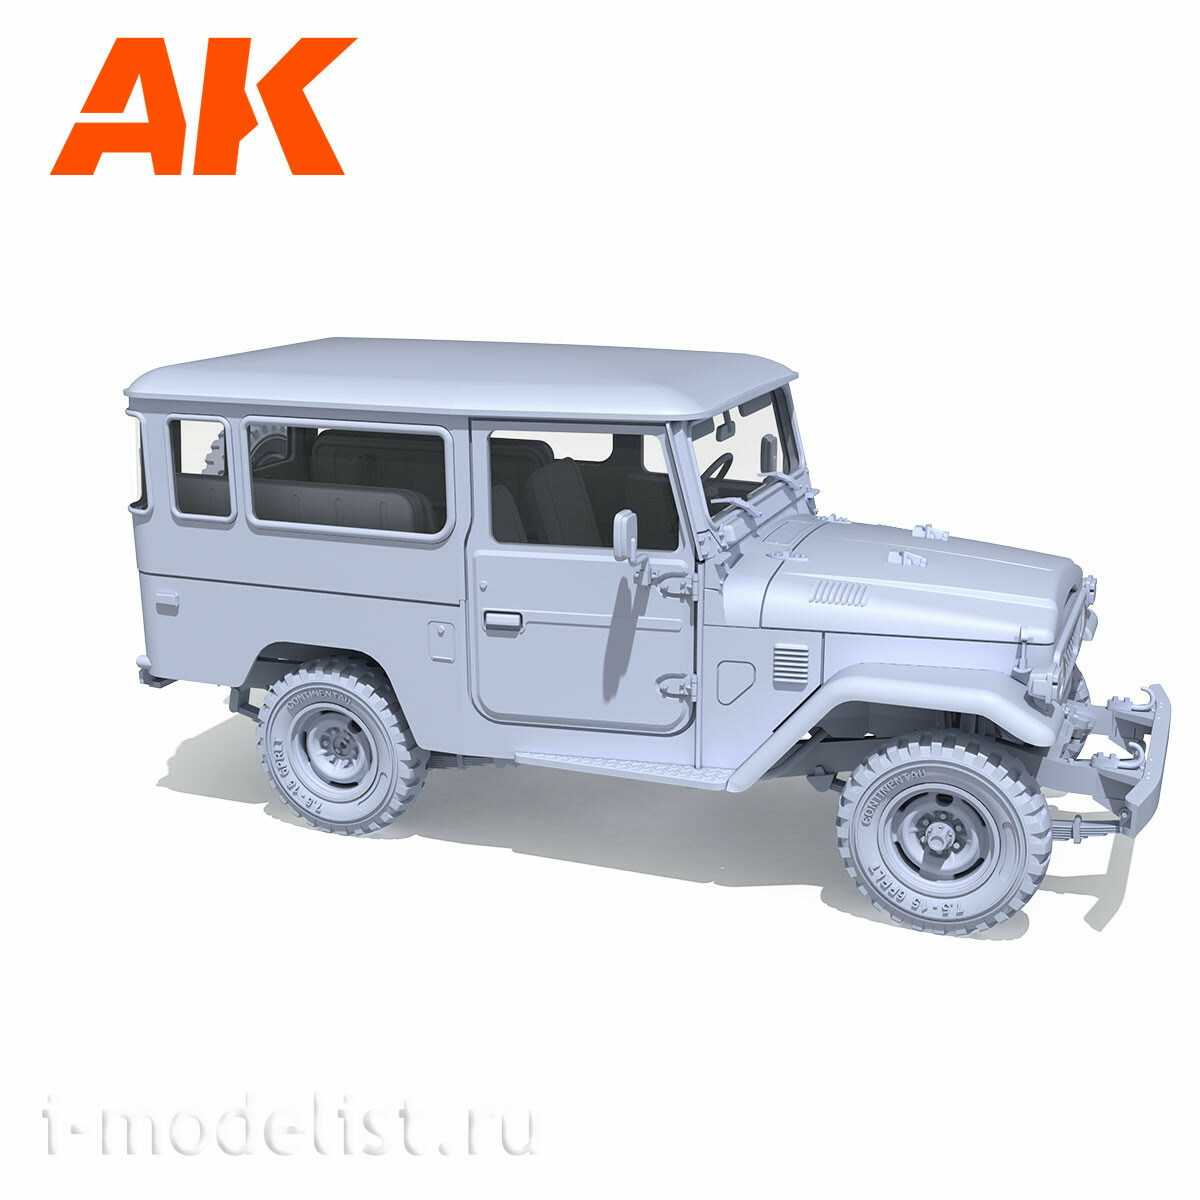 AK35001 AK Interactive 1/35 Внедорожник FJ43 SUV с жёстким верхом